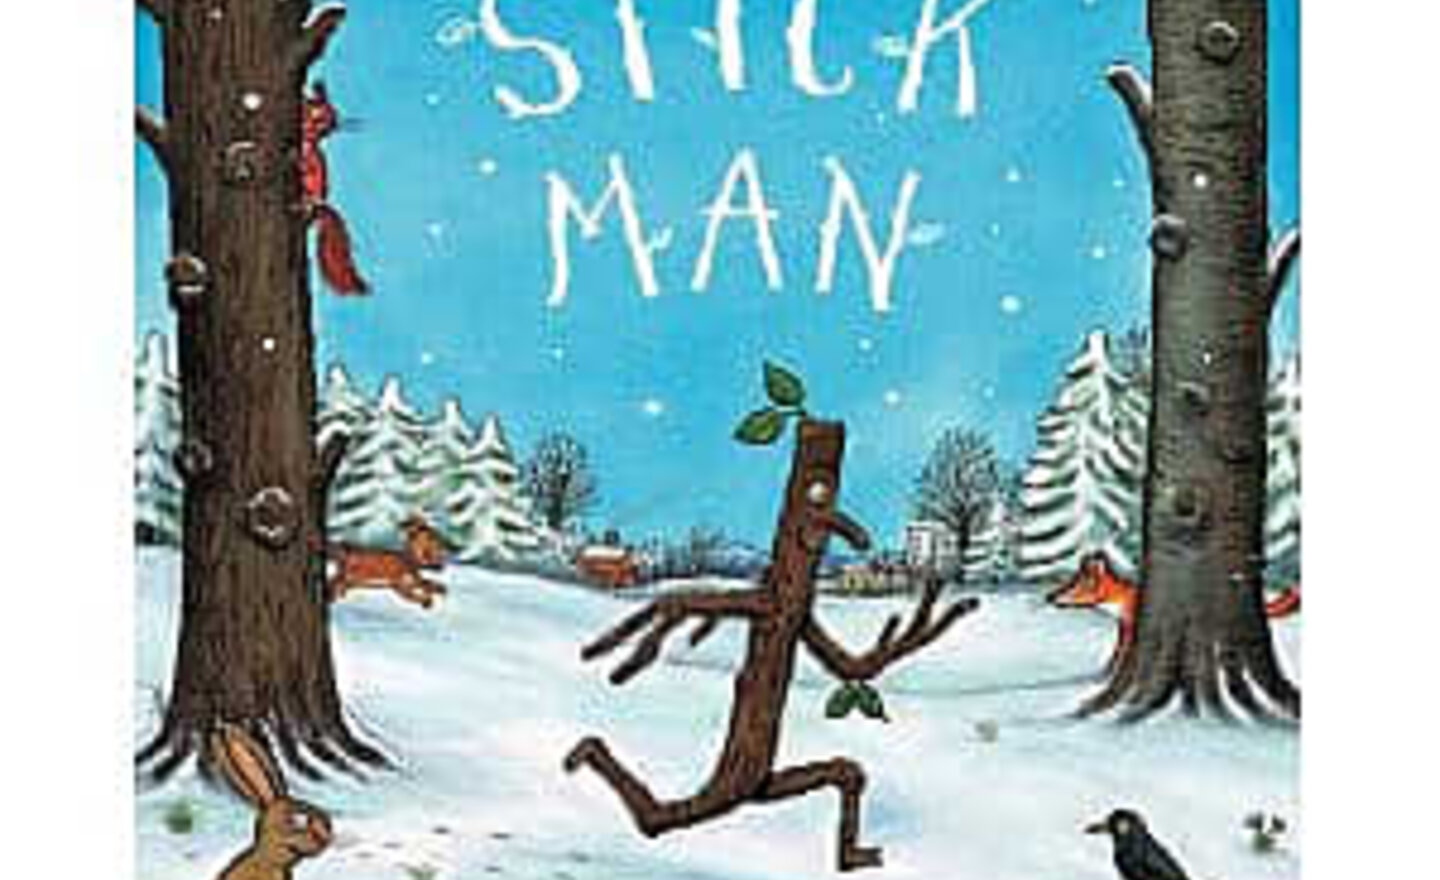 Image of Stick Man - Peer Critique